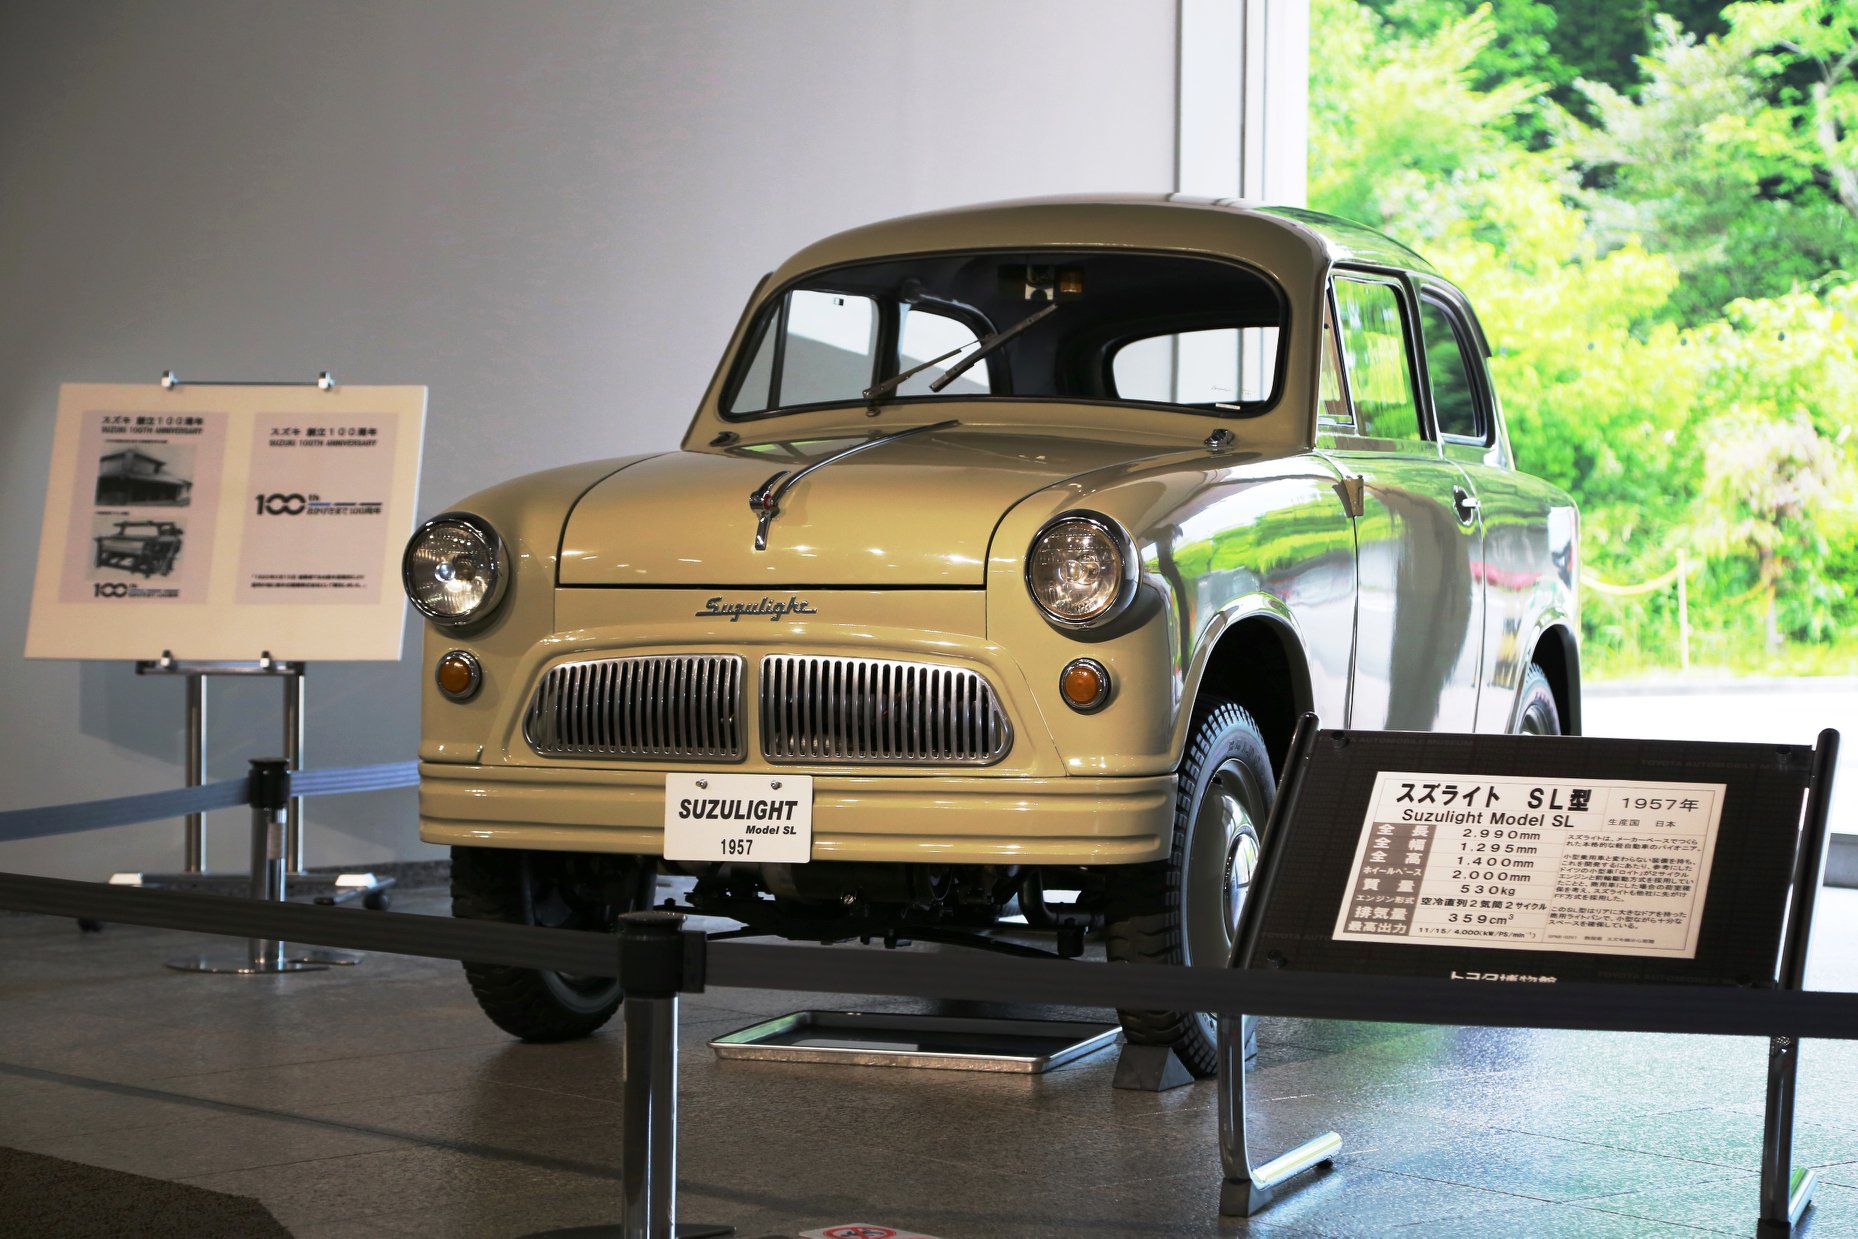 Entrance Exhibit Of Cultural Gallery Mazda Three Wheel Truck And Suzuki Suzulight Announcements Toyota Automobile Museum